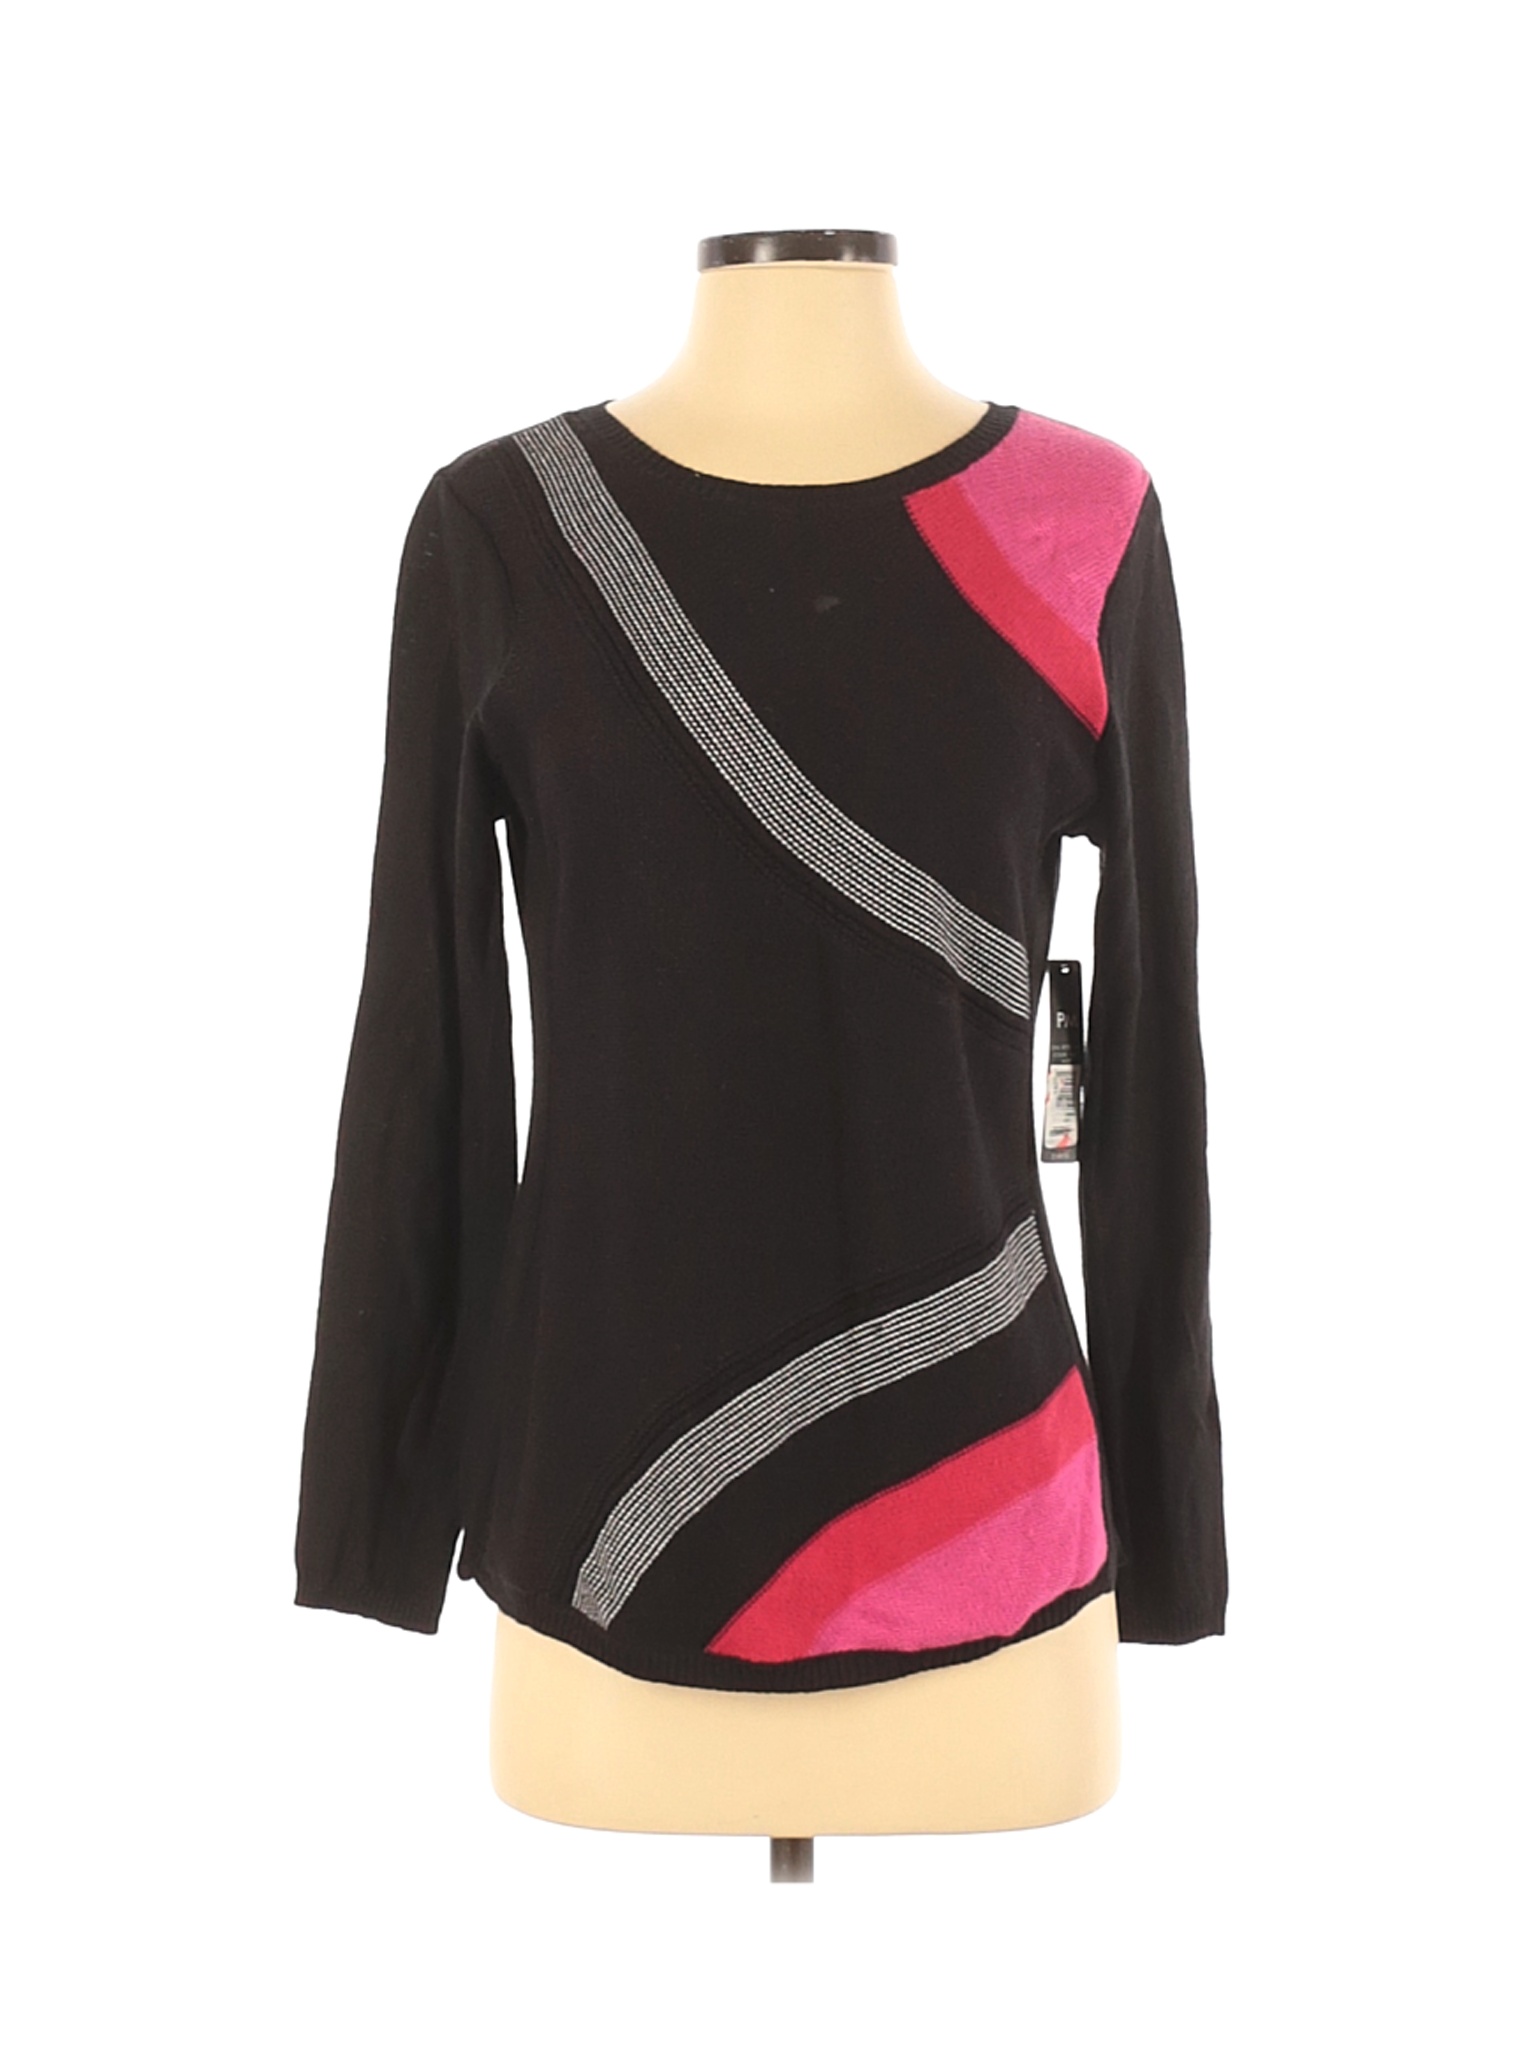 NWT Nic + Zoe Women Black Pullover Sweater M Petites | eBay